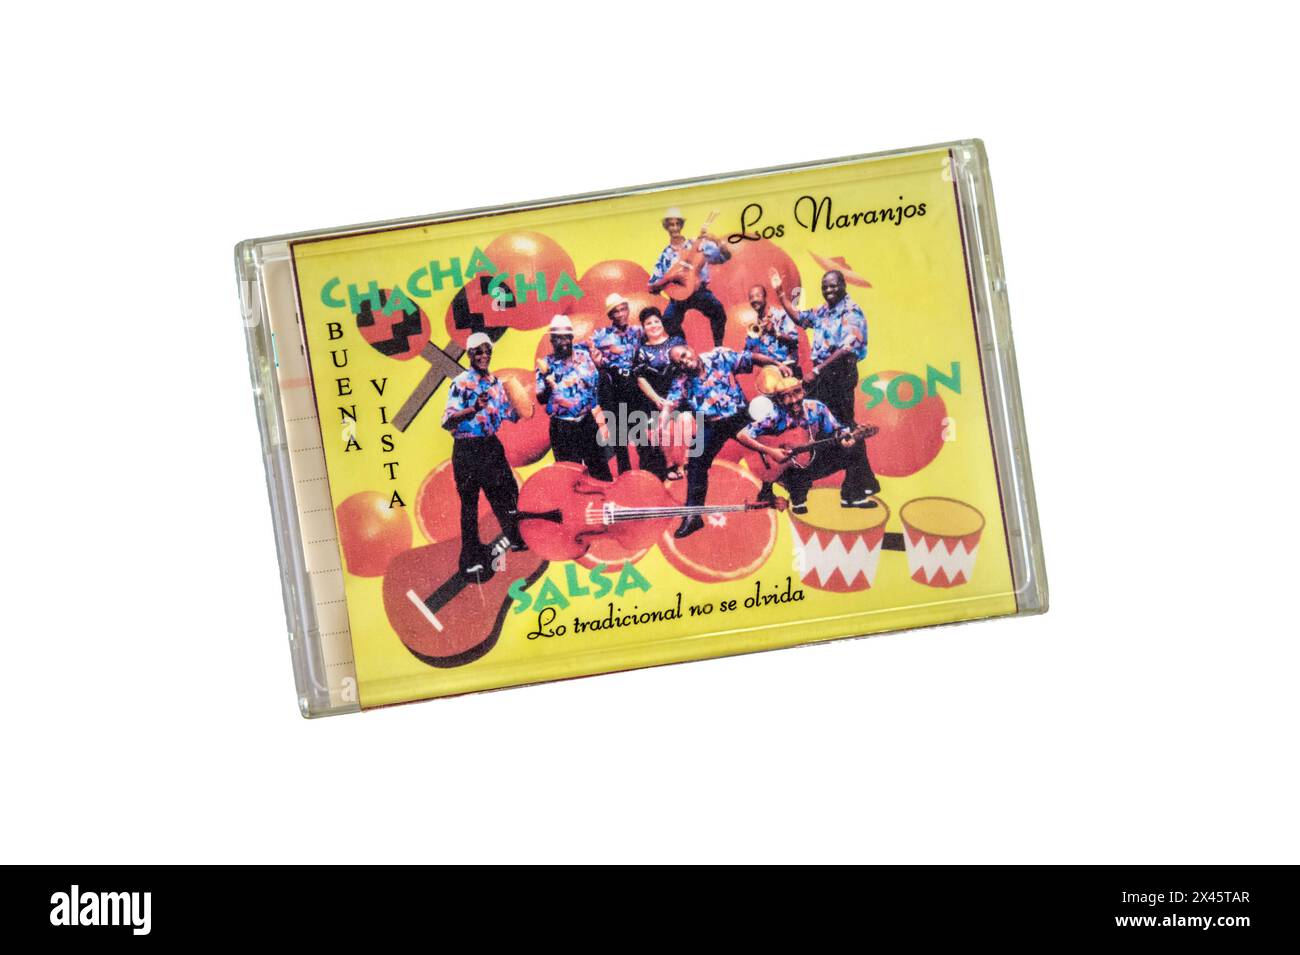 La Tradicion No Se Olvida by Los Naranjos, from Cienfuegos, Cuba.  Sold by the band on cassette. Stock Photo